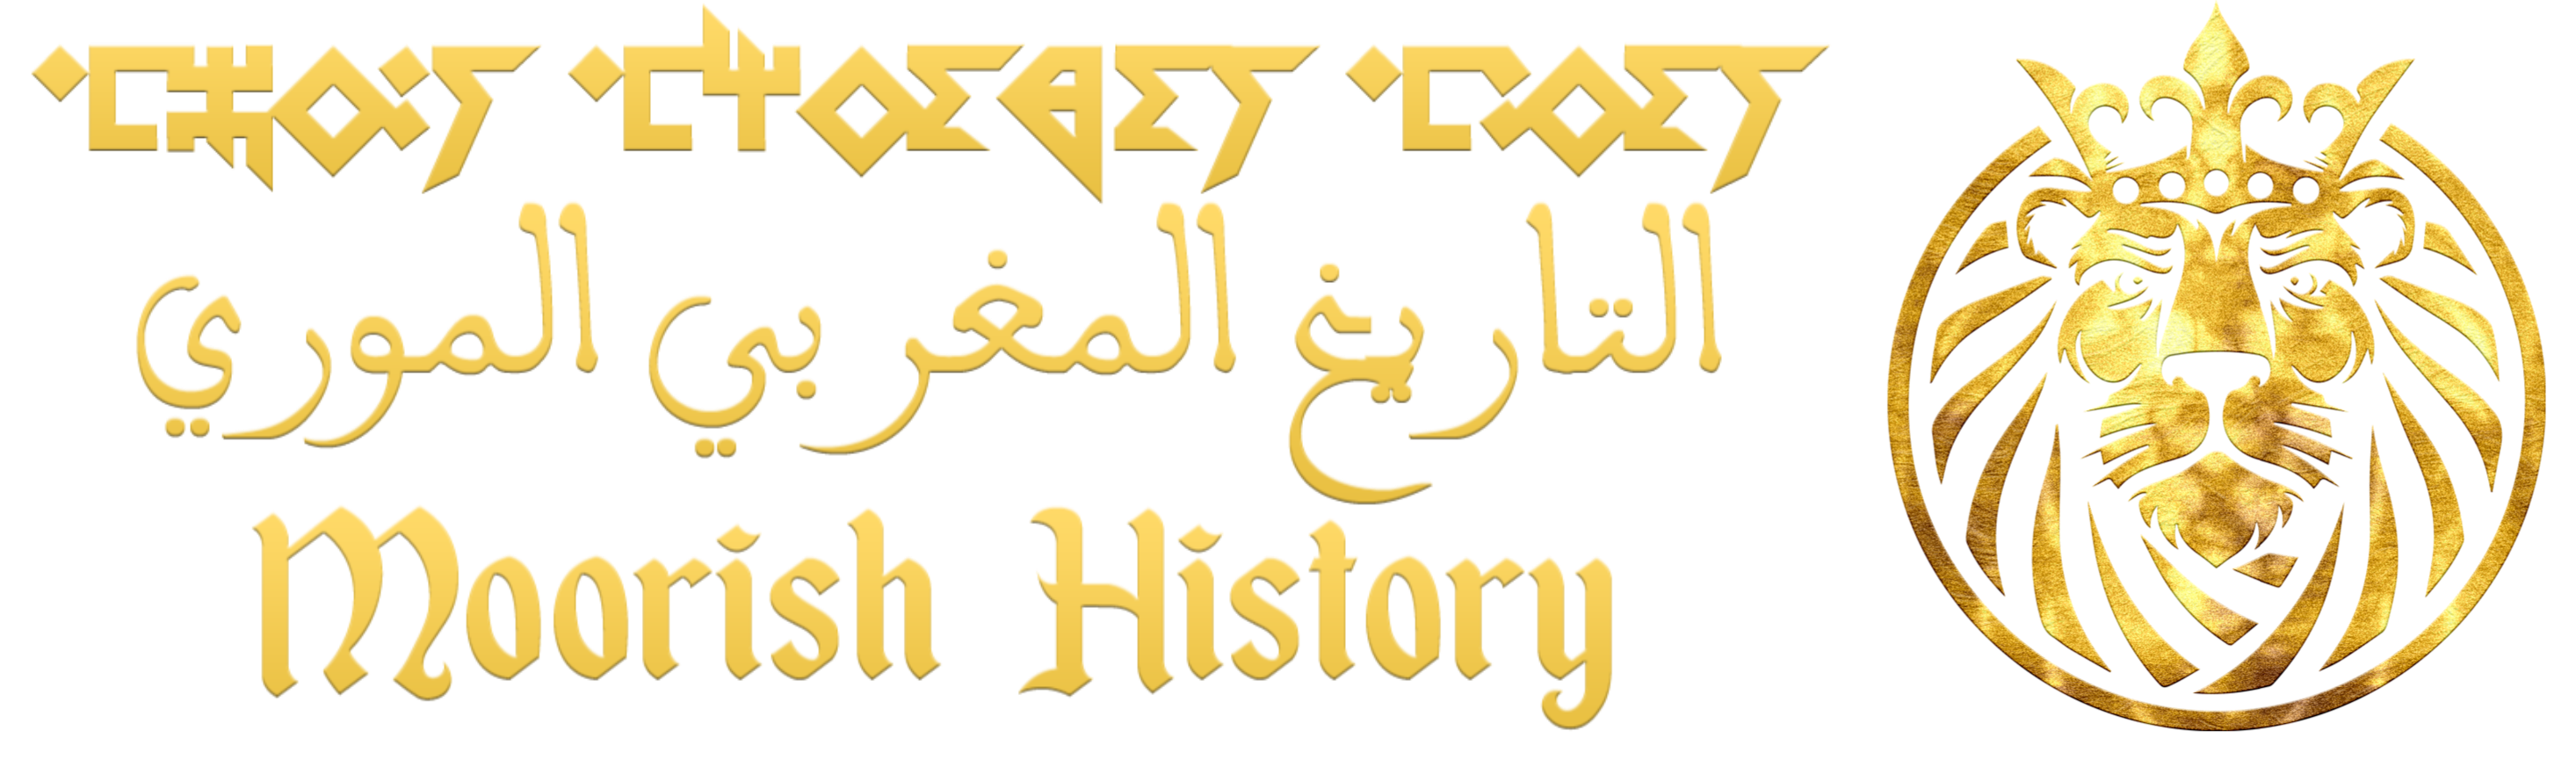 Moorish History